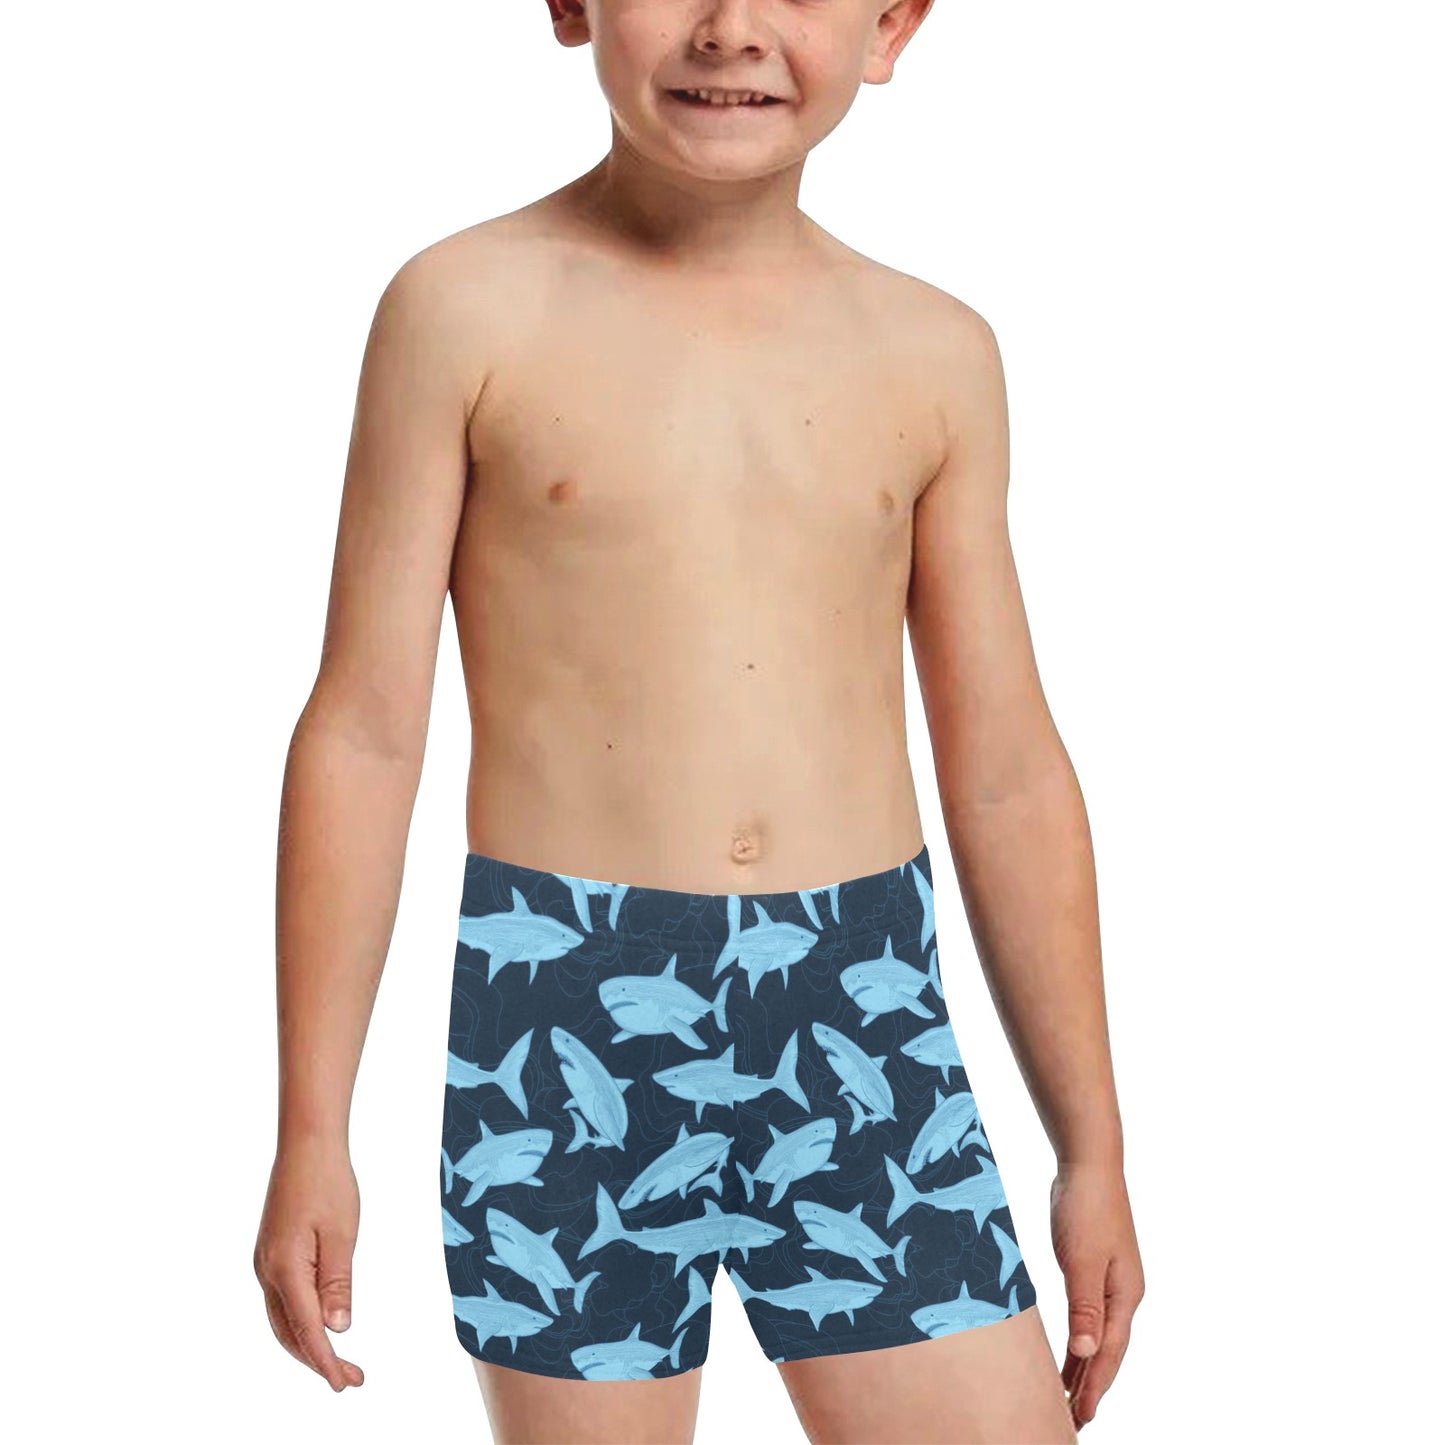 Shark Boys Swim Trunks shorts (2-7), Navy Blue Bathing Suit Toddler Beach Swim Kids with Inner Lining Drawstring Casual Shorts Swimsuit Starcove Fashion